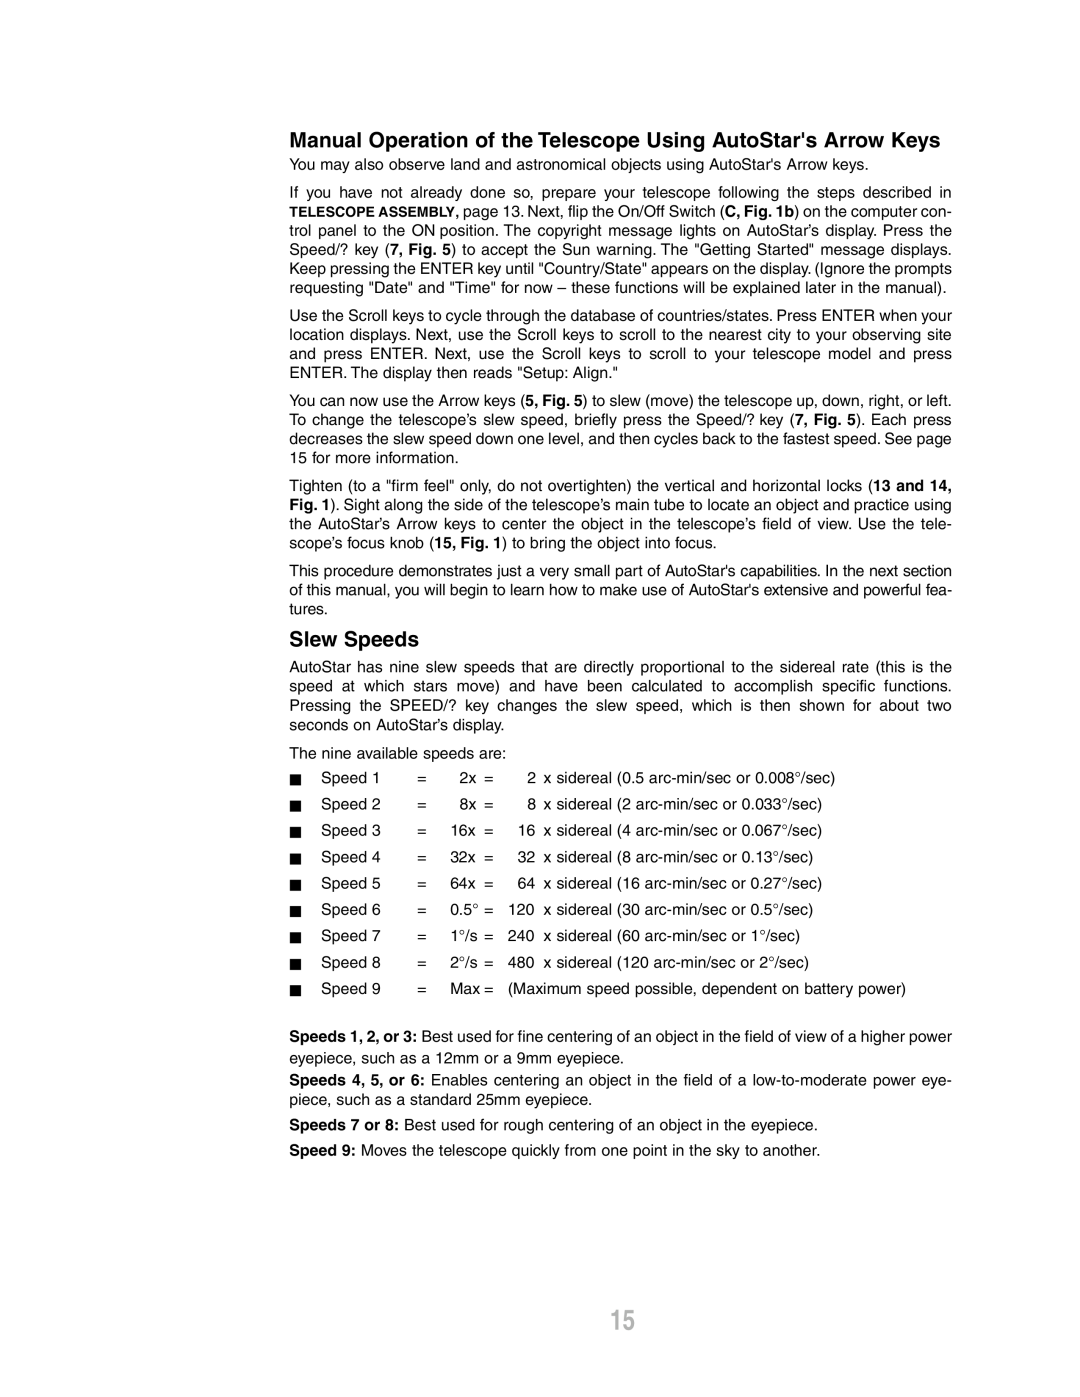 Meade ETX-80AT-TC instruction manual Manual Operation of the Telescope Using AutoStars Arrow Keys, Slew Speeds 